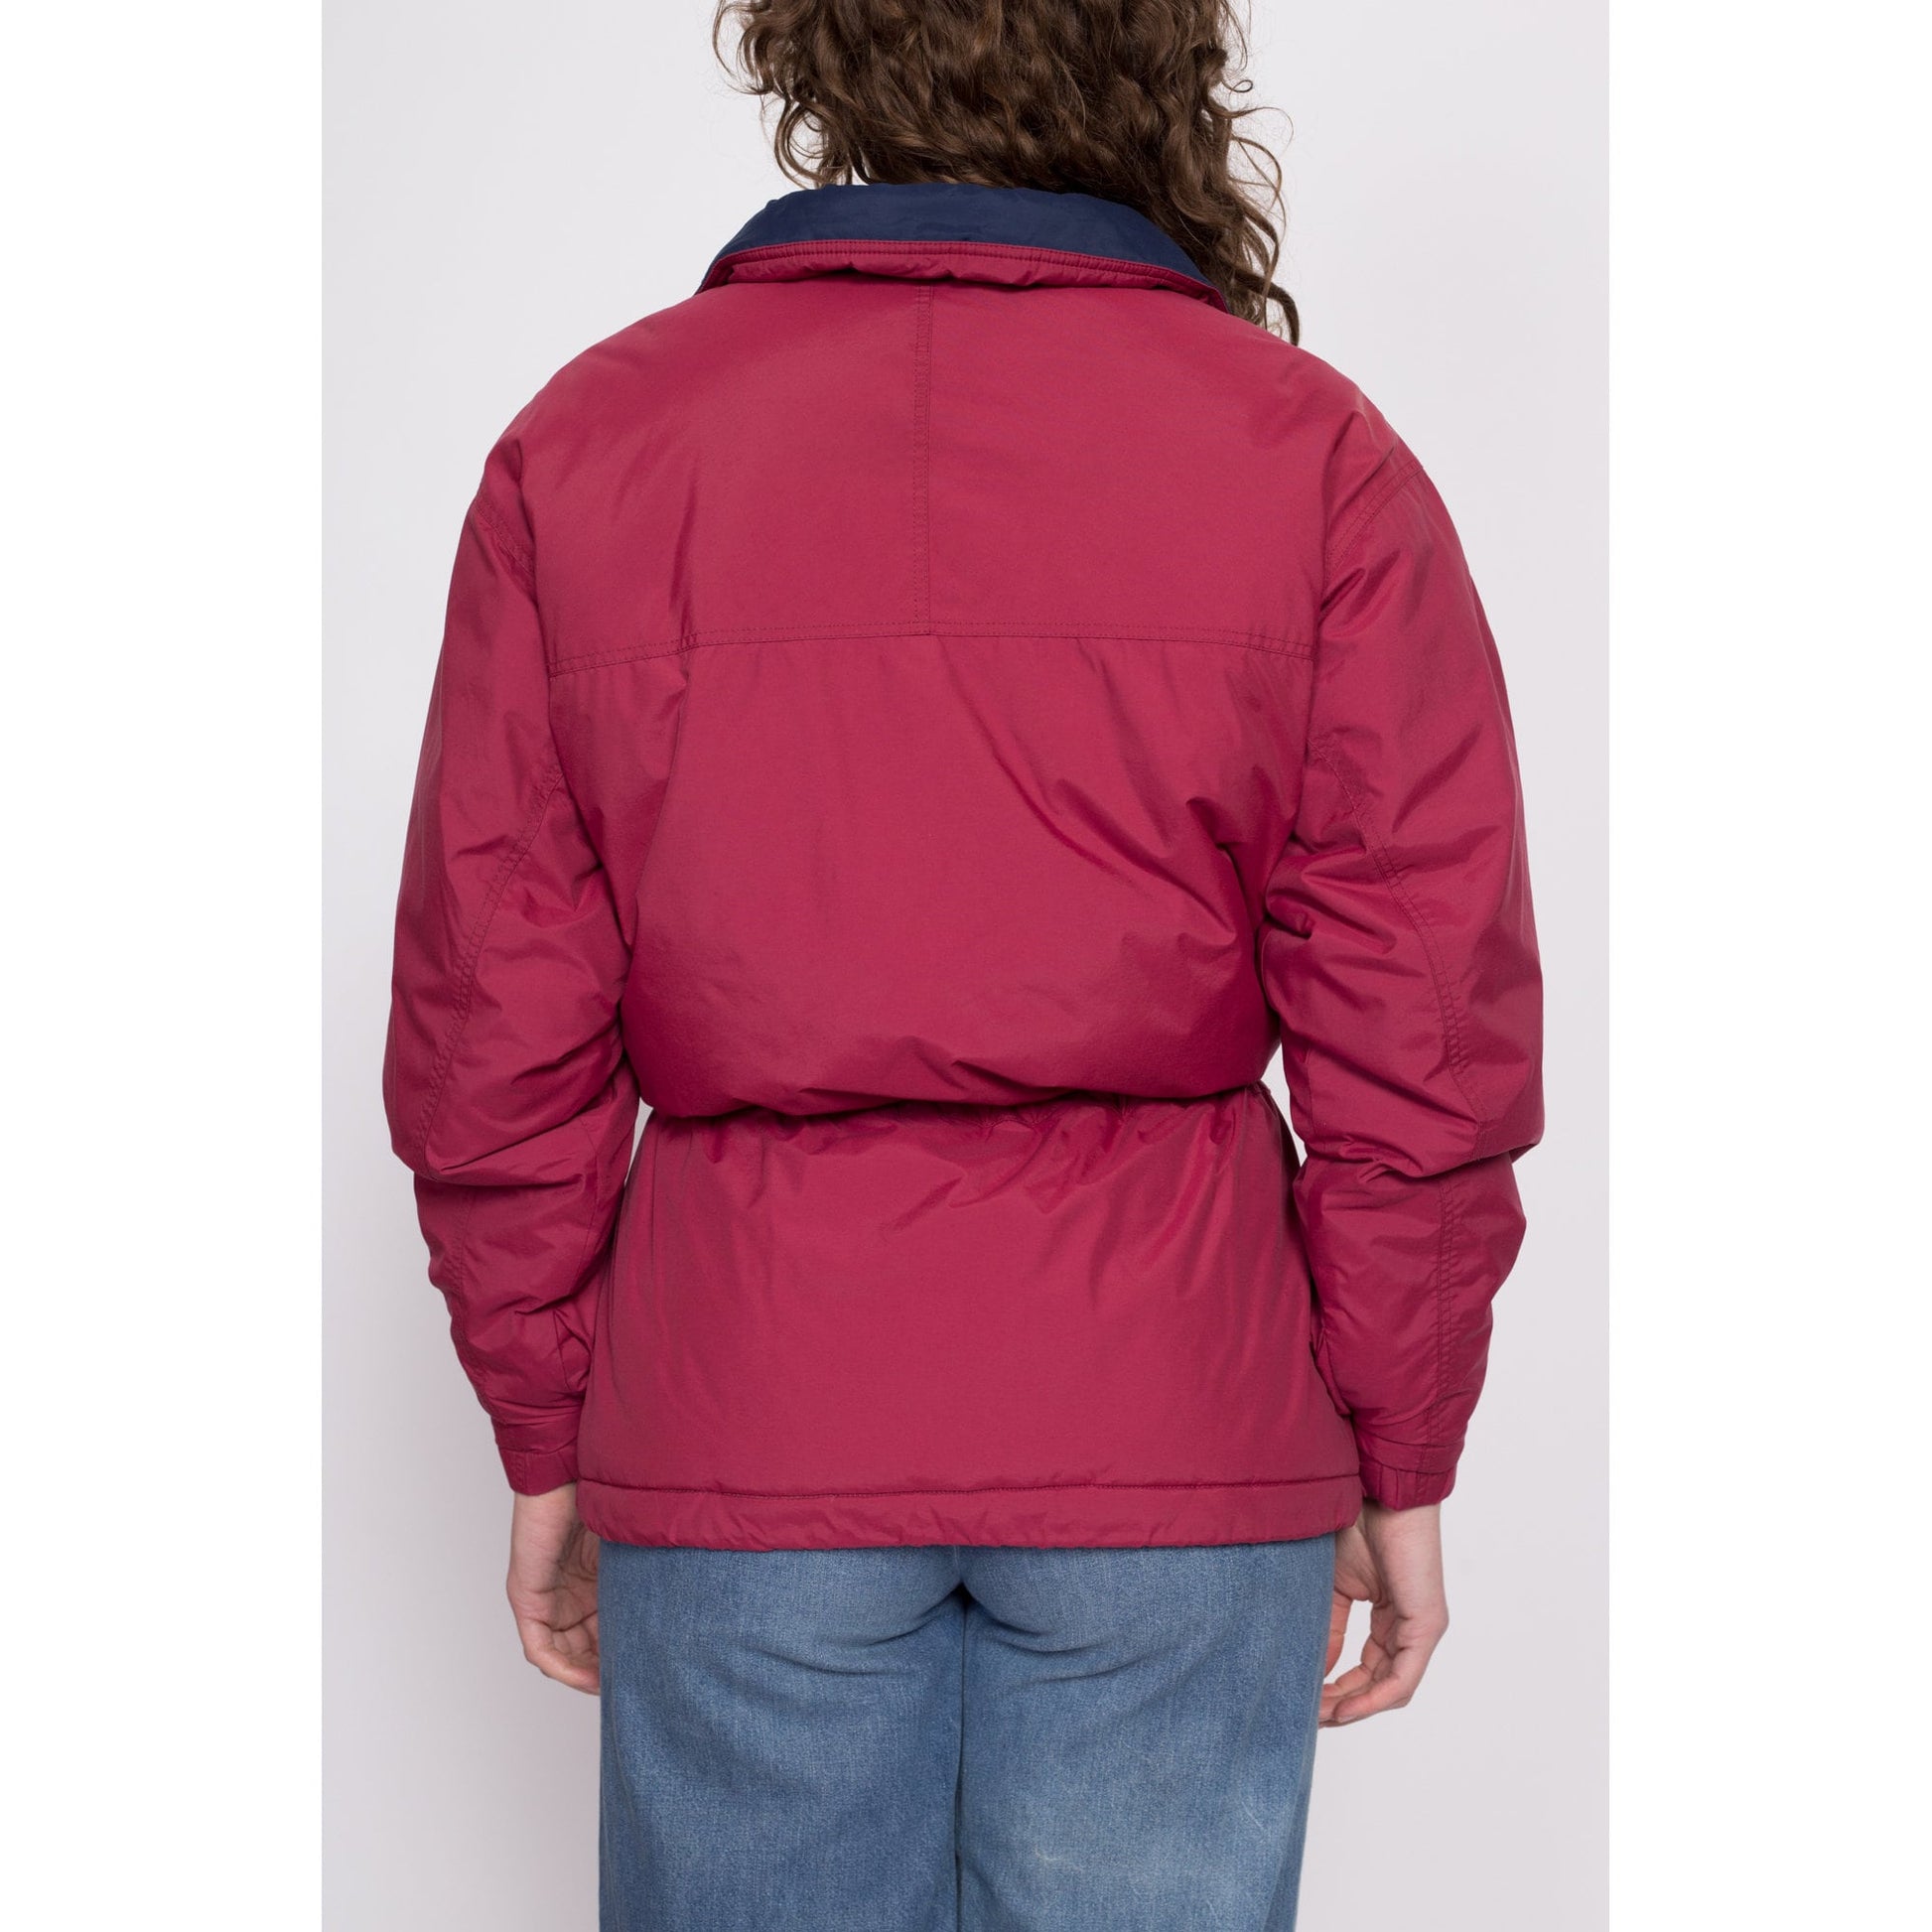 Patagonia Jacket - Small Pink Polyester